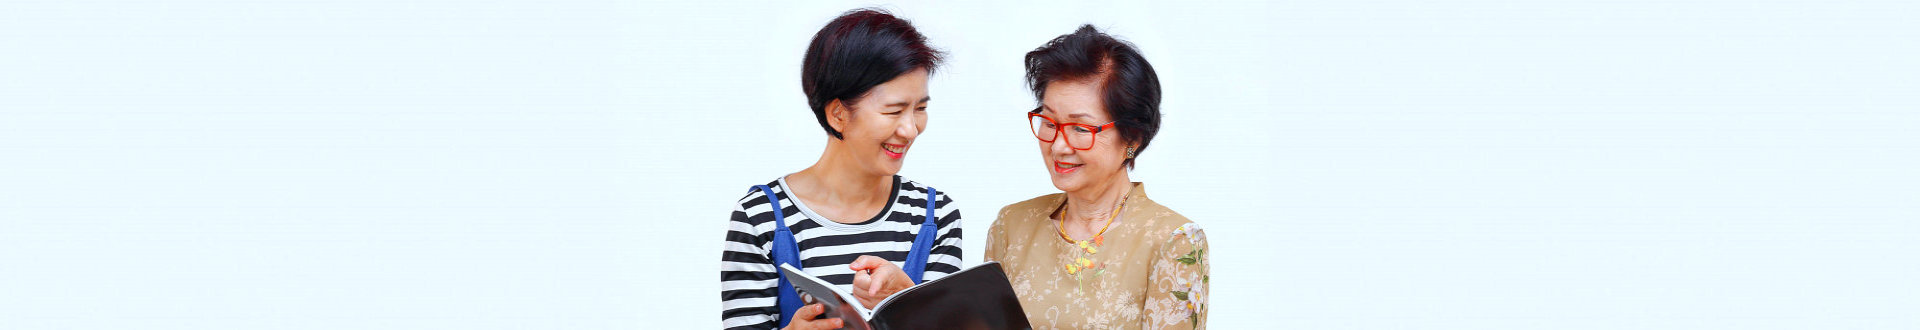 caregiver and a senior woman reading a magazine